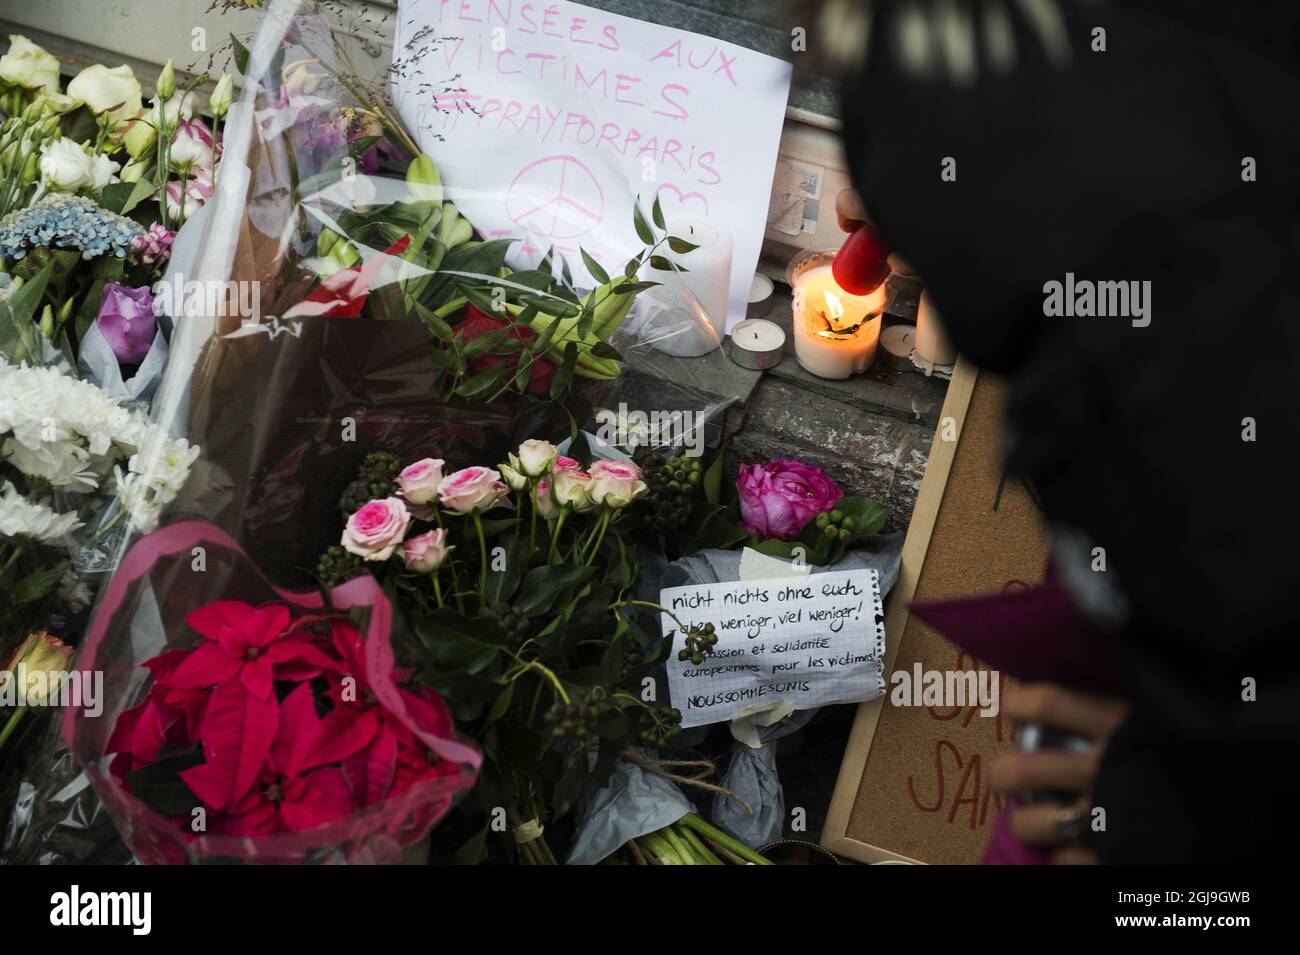 PARIS 2015-11-14 Blommor utanfor restaurangen Le Petit Cambodge i Paris pa lordagen. Fredagens terrorattack i Paris kravde over 120 dodsoffer. Foto: Vilhelm Stokstad / TT kod 13370 Stock Photo